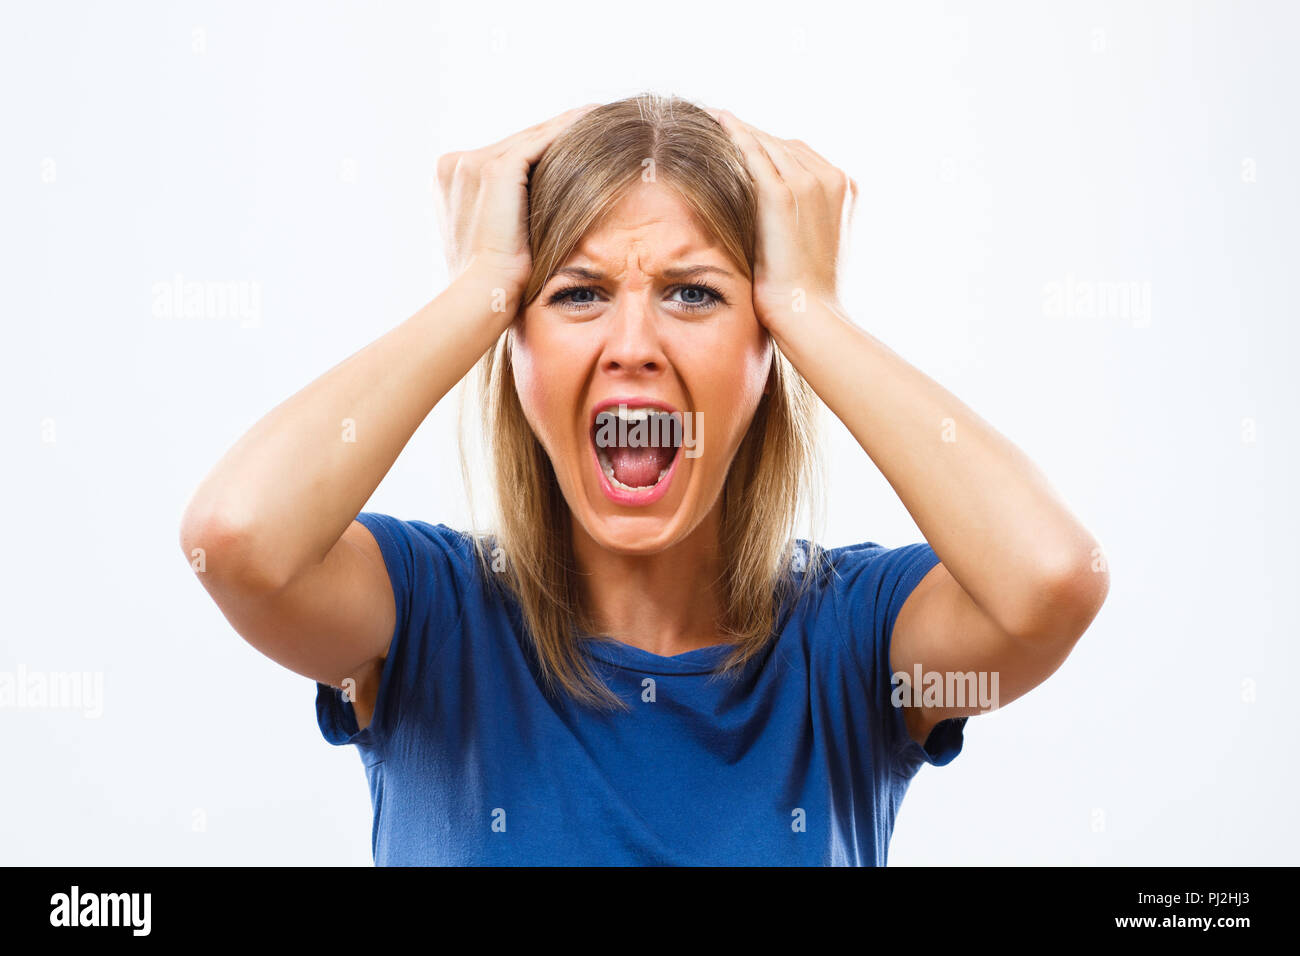 angry-woman-screaming-PJ2HJ3.jpg